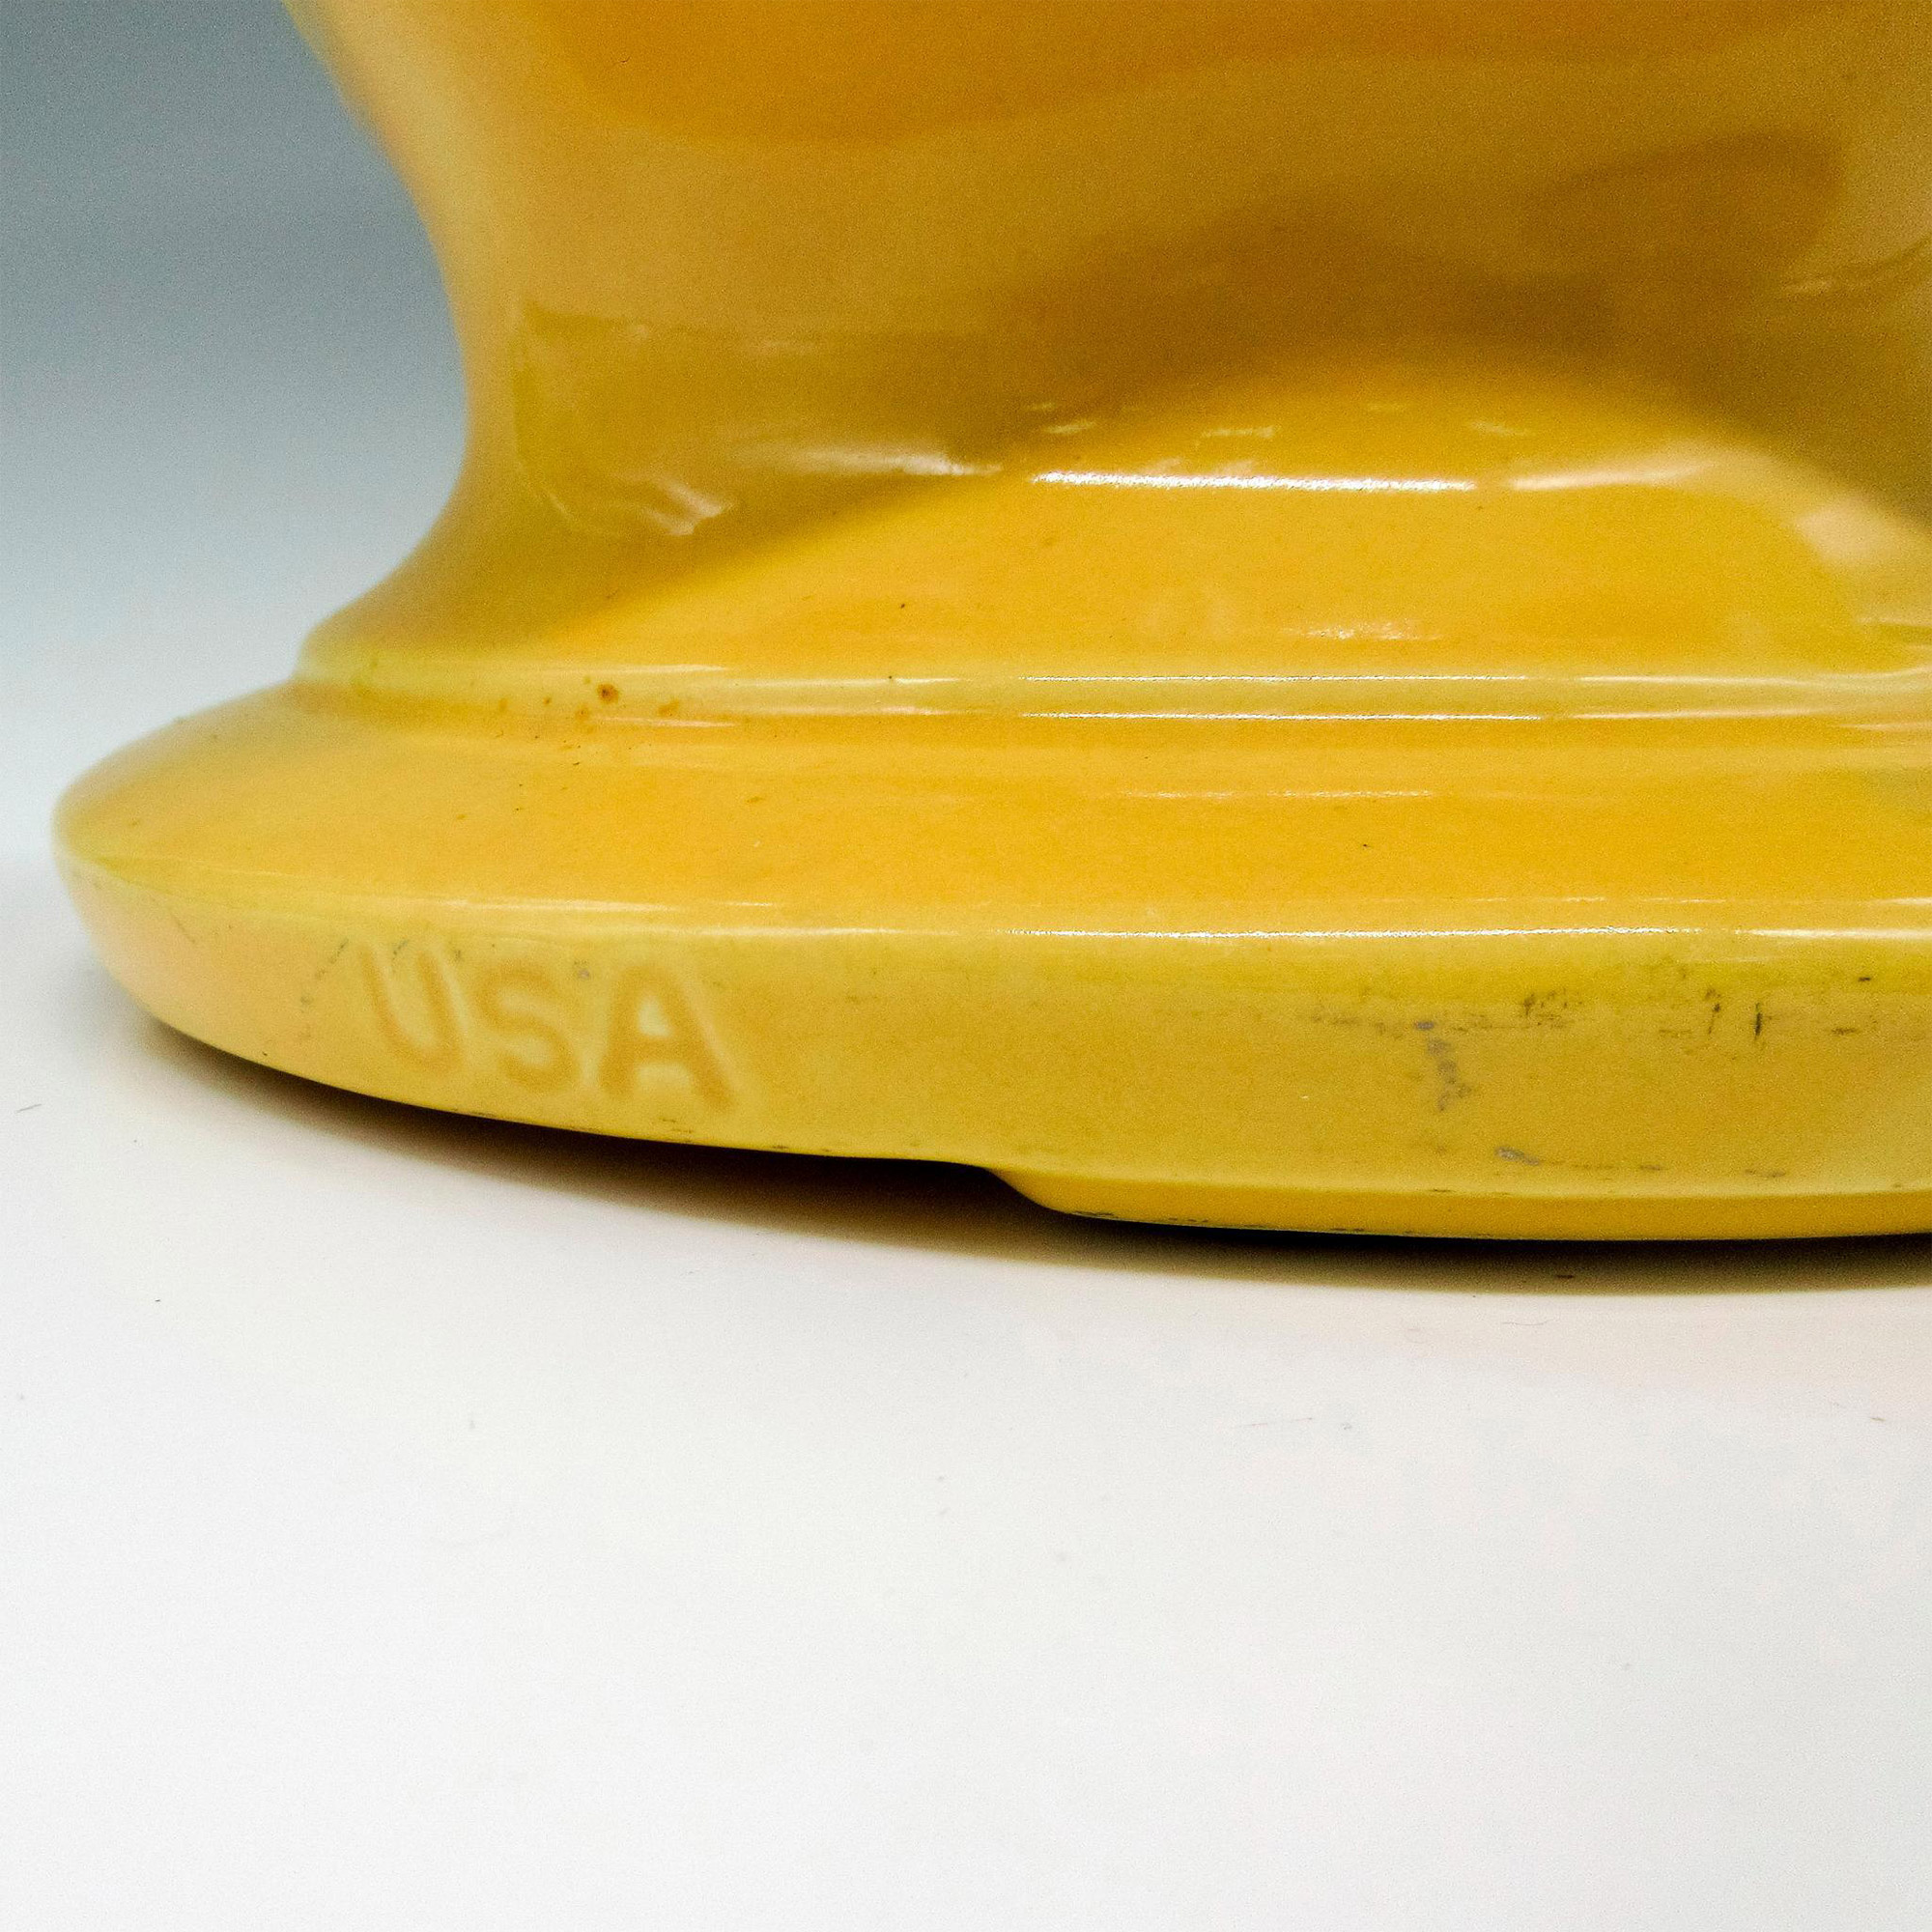 USA Pottery Cookie Jar - Image 3 of 4